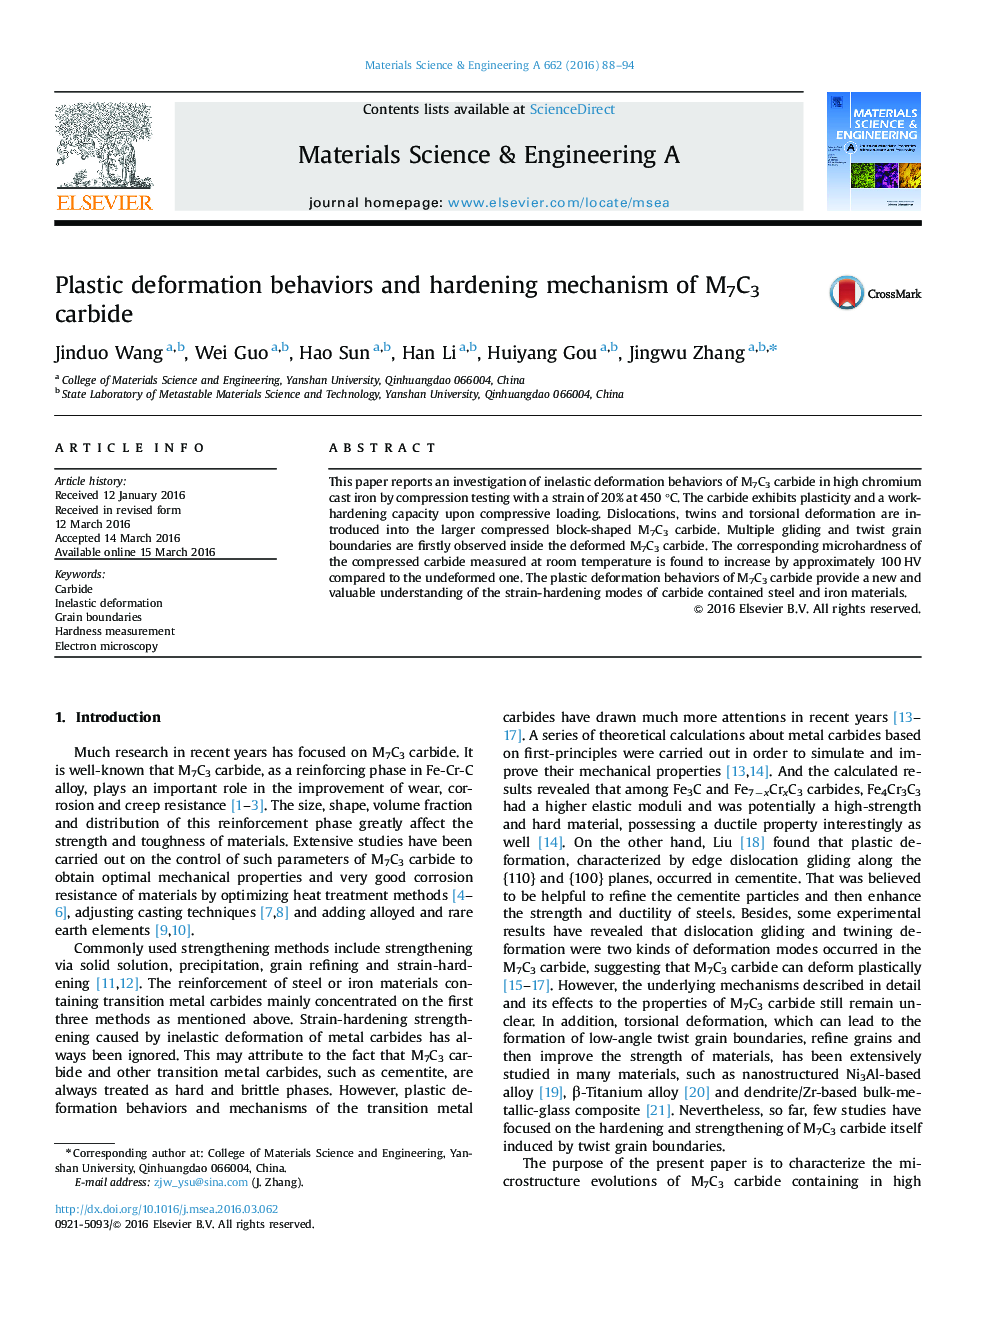 Plastic deformation behaviors and hardening mechanism of M7C3 carbide